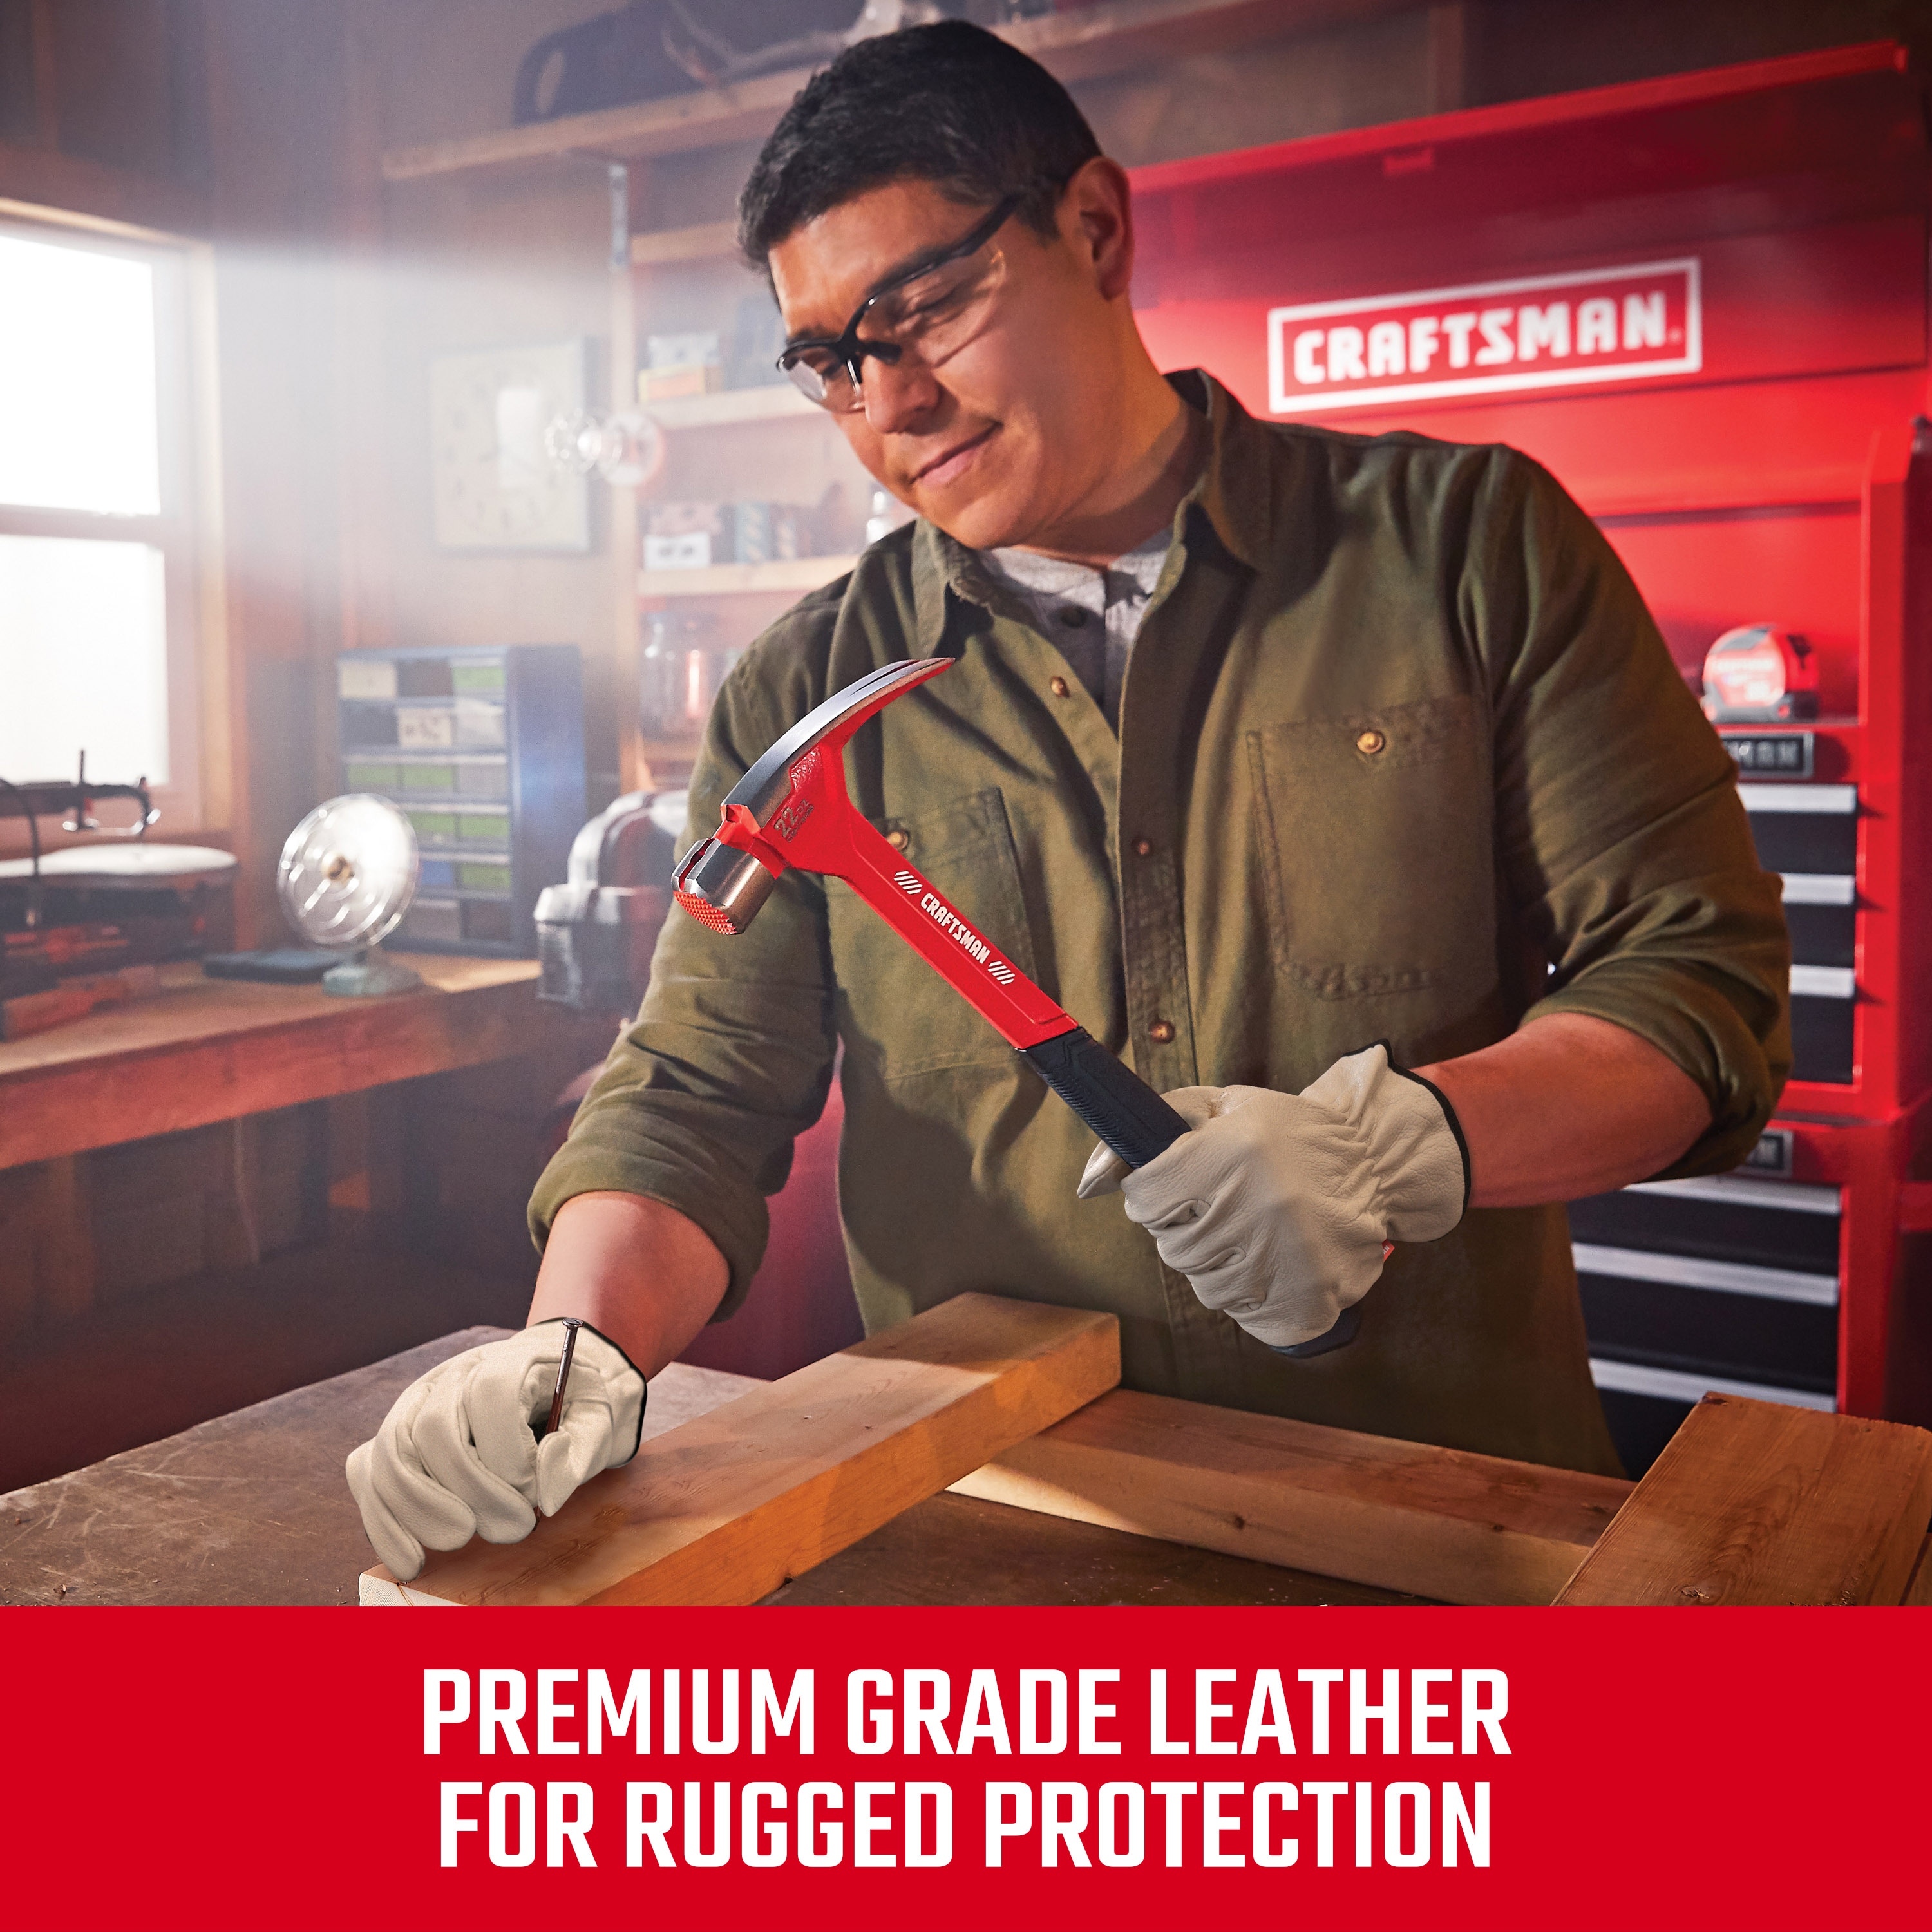 Radians Craftsman Performance Hybrid Leather Work Glove XL, Red  (CMXPGRA216XL)